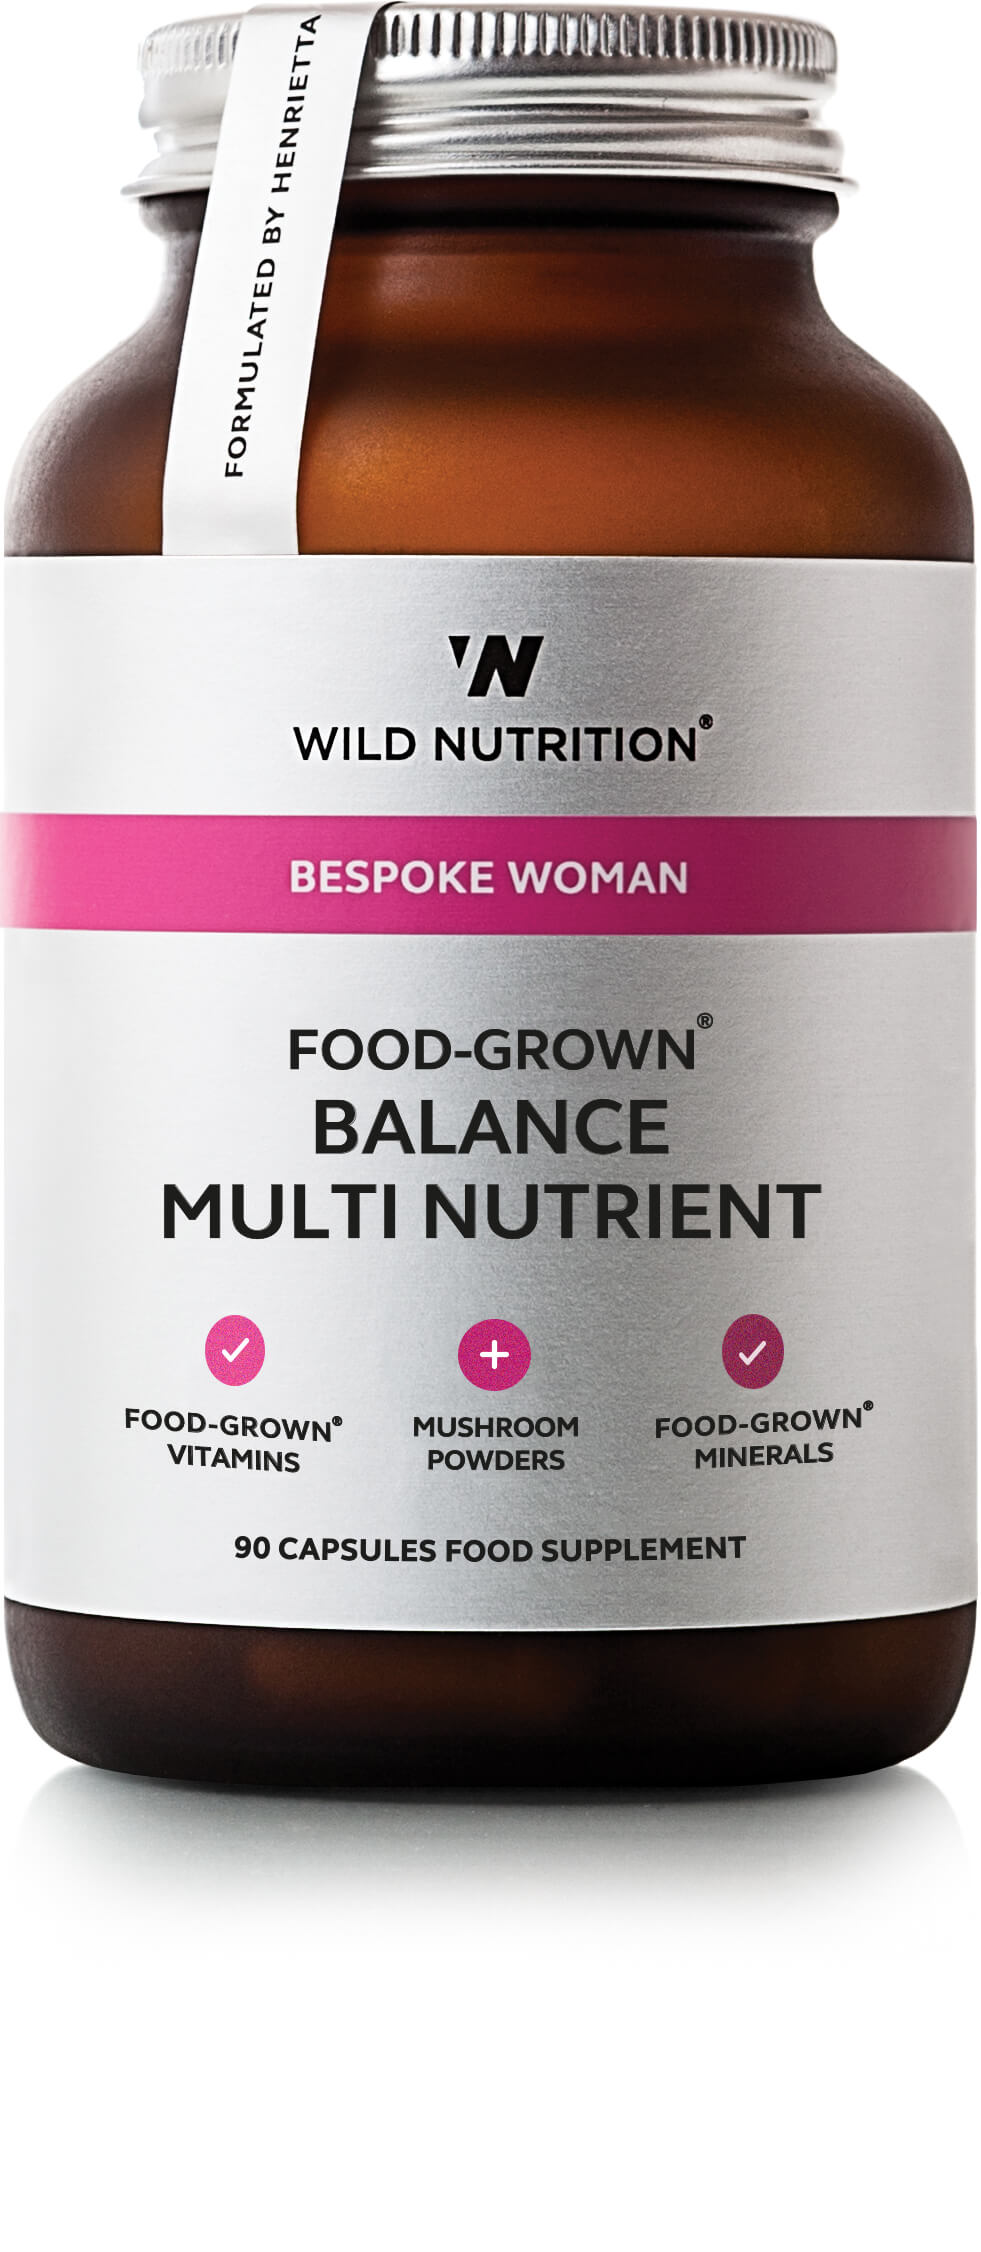 Bespoke Woman Food-Grown Balance Multi Nutrient 90's